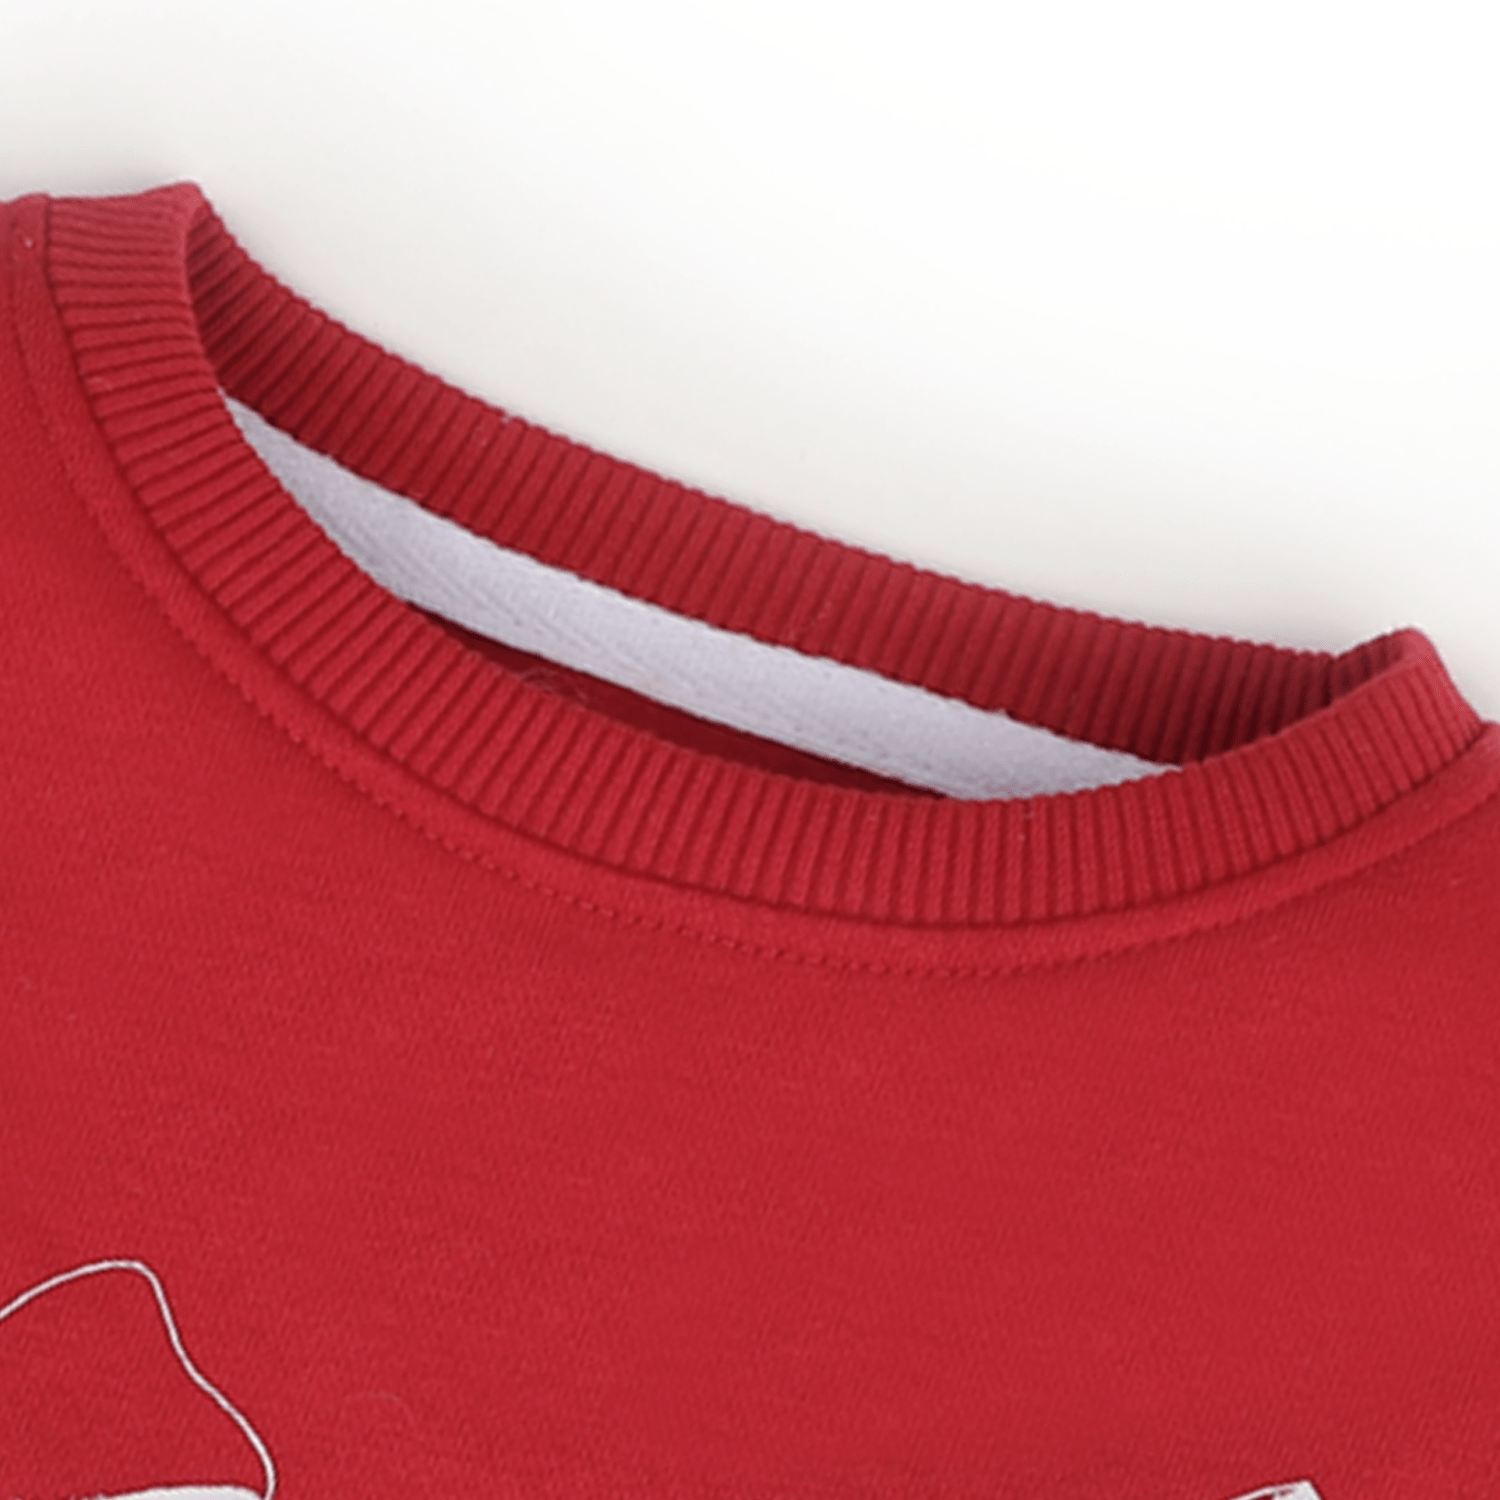 Stone Harbor Girl's Sweatshirt Red / 2-3 Y GIRL'S RED FLEECE SWEATSHIRT